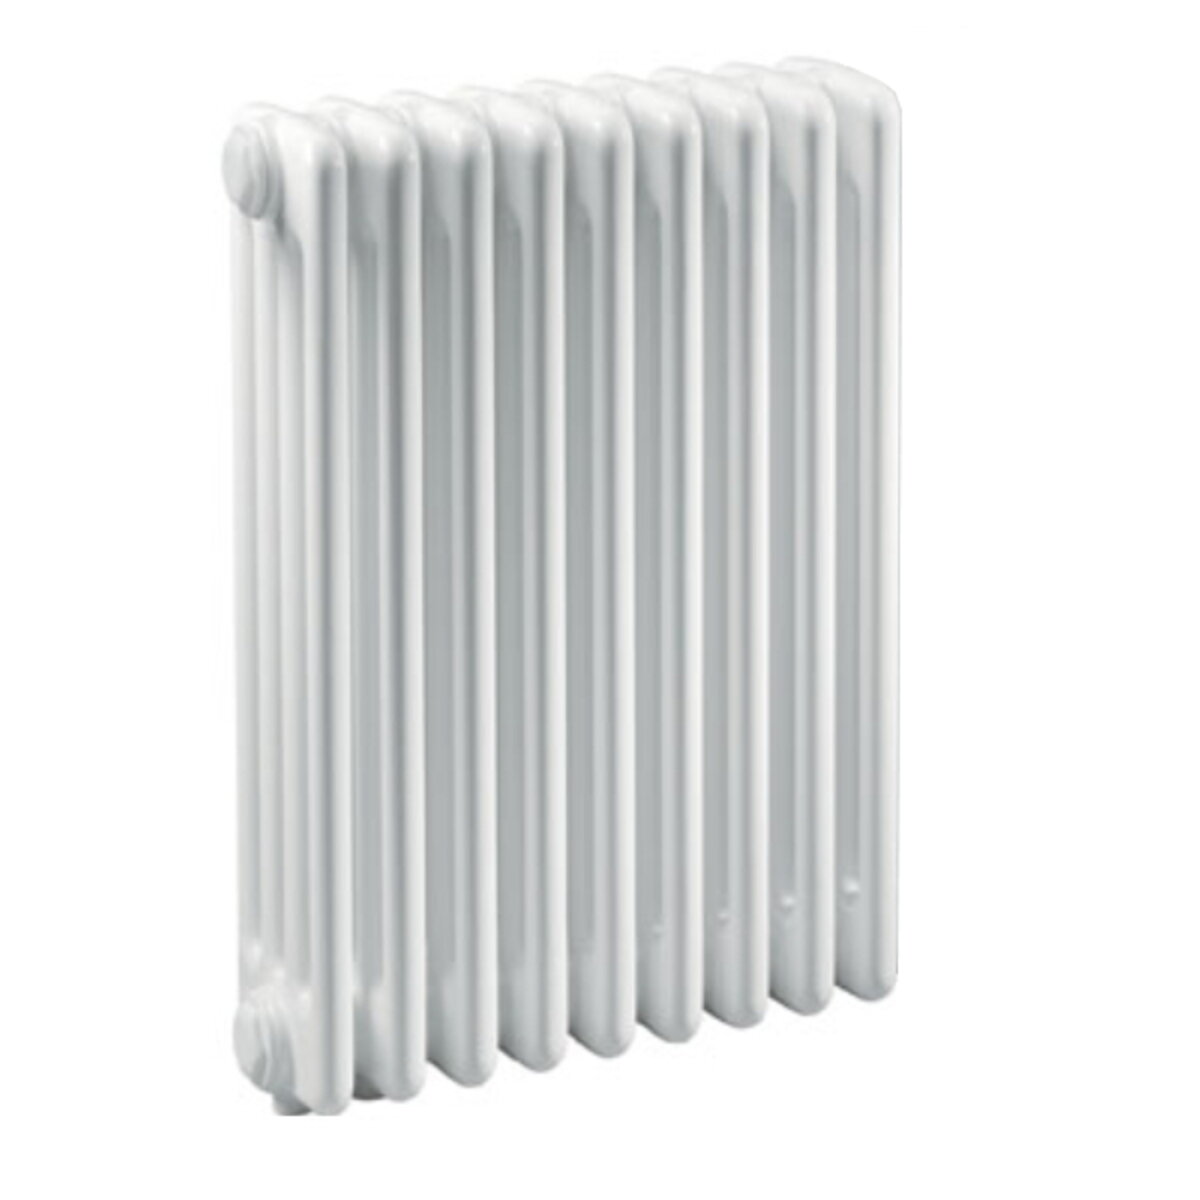 Ercos Comby steel column radiator 9 elements 3 columns center distance 1435 mm